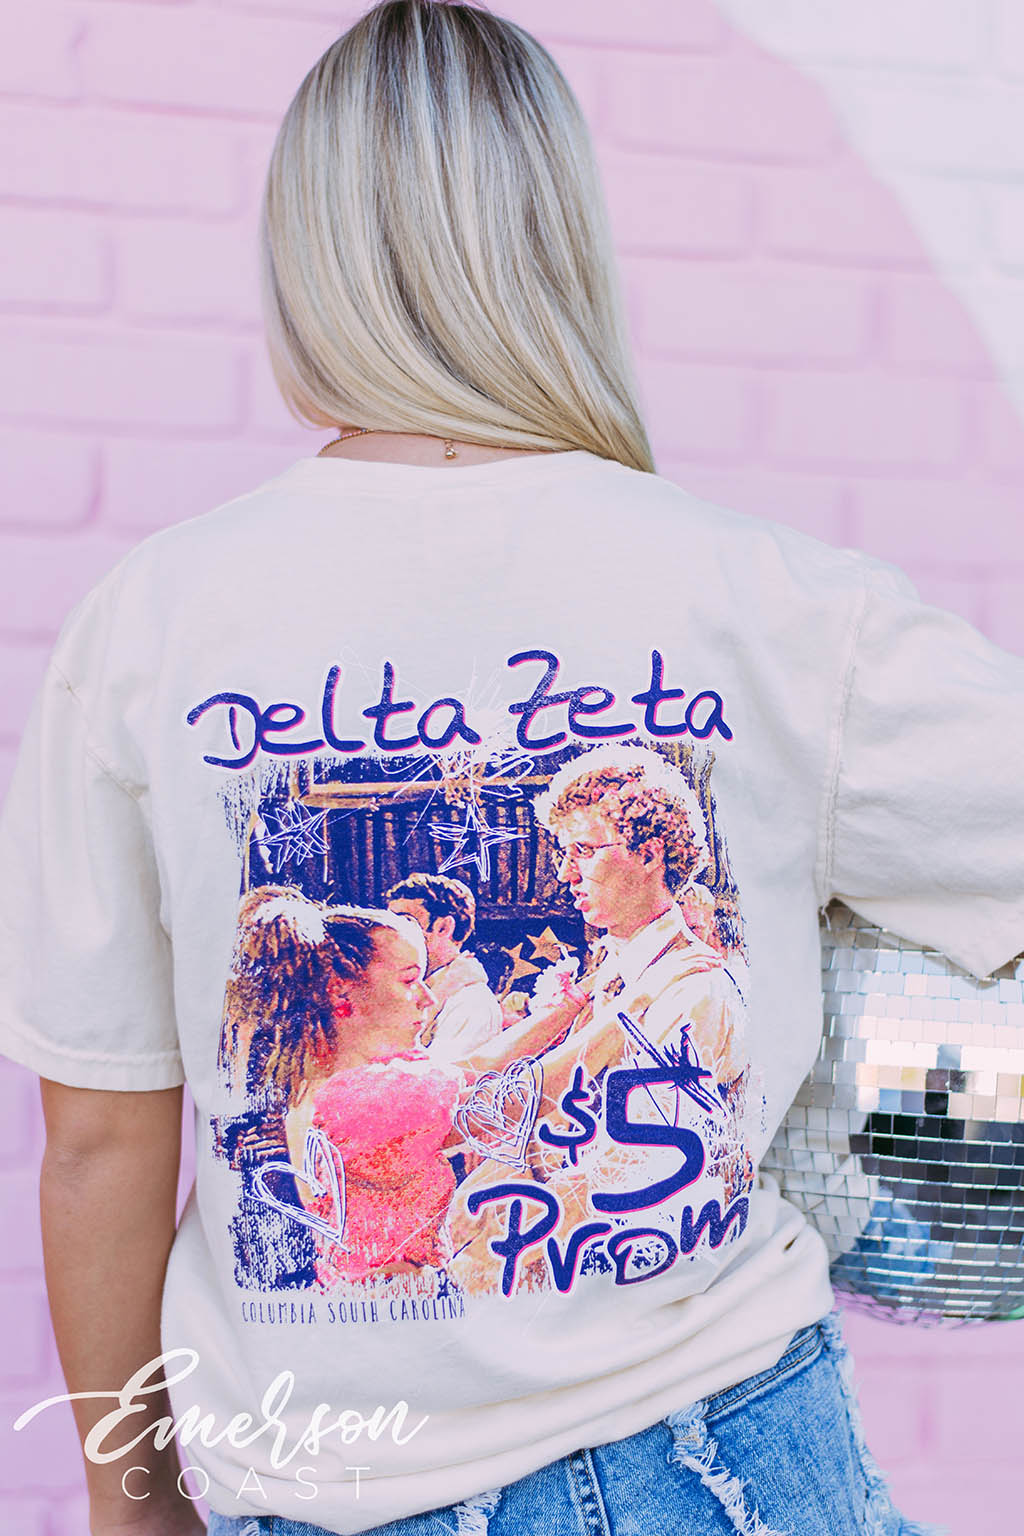 Delta Zeta $5 Prom Function Tshirt